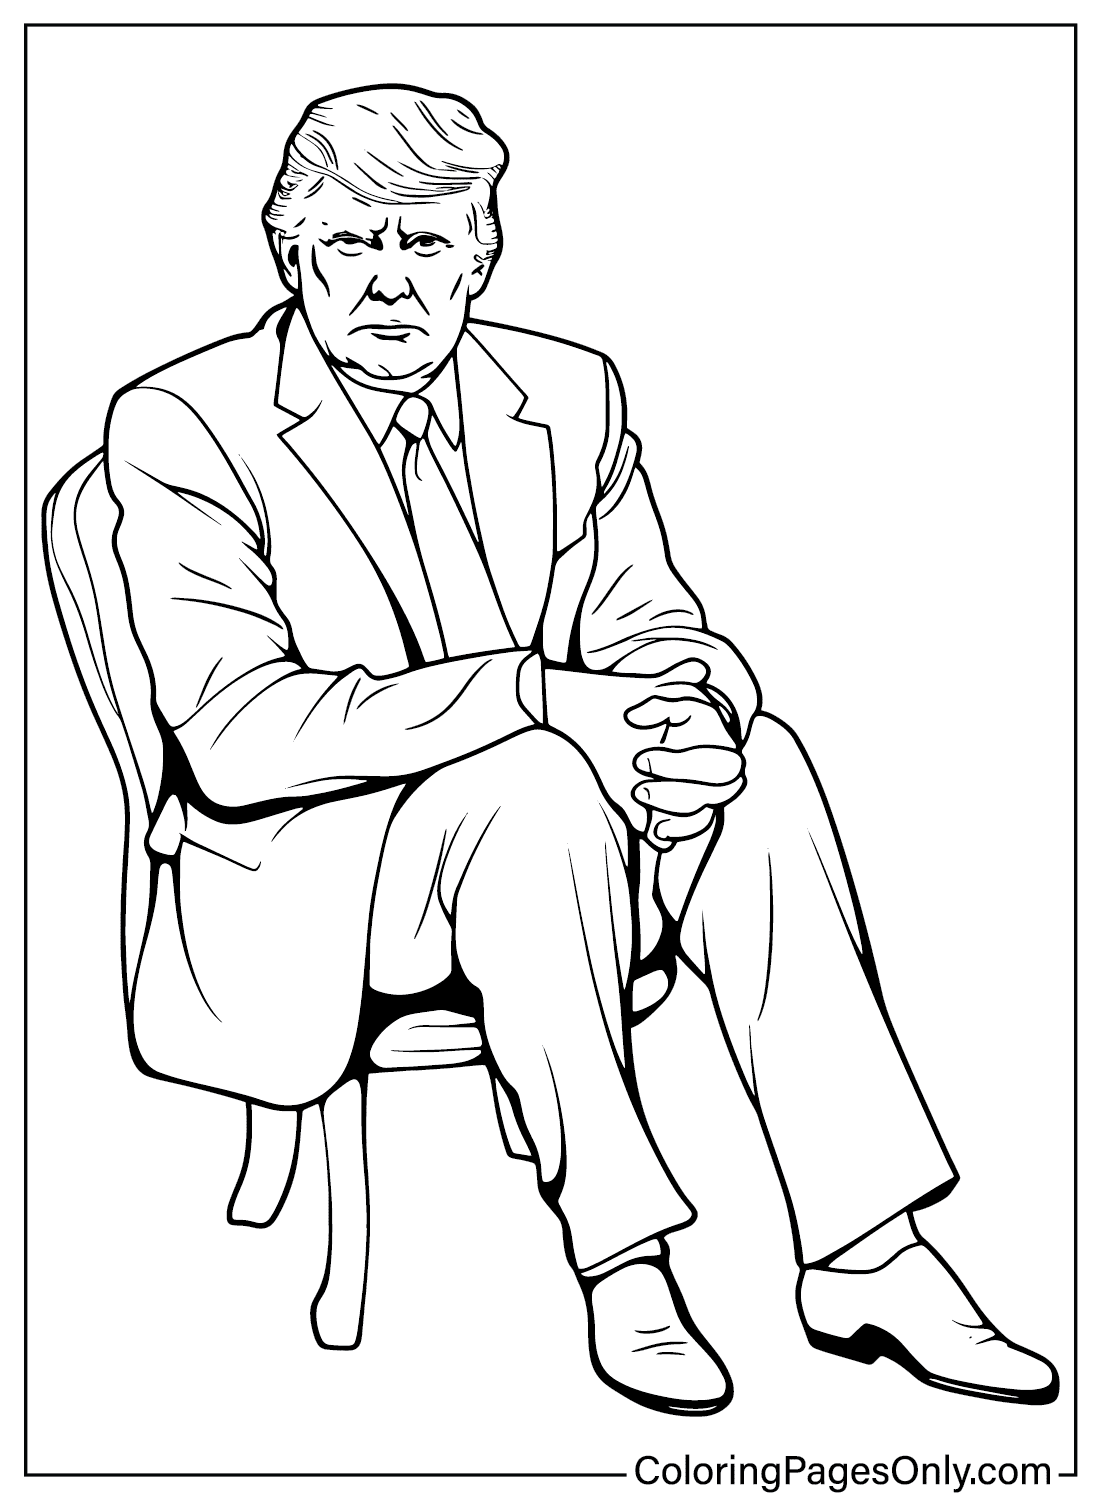 Página para colorear de Donald Trump para imprimir gratis de Donald Trump